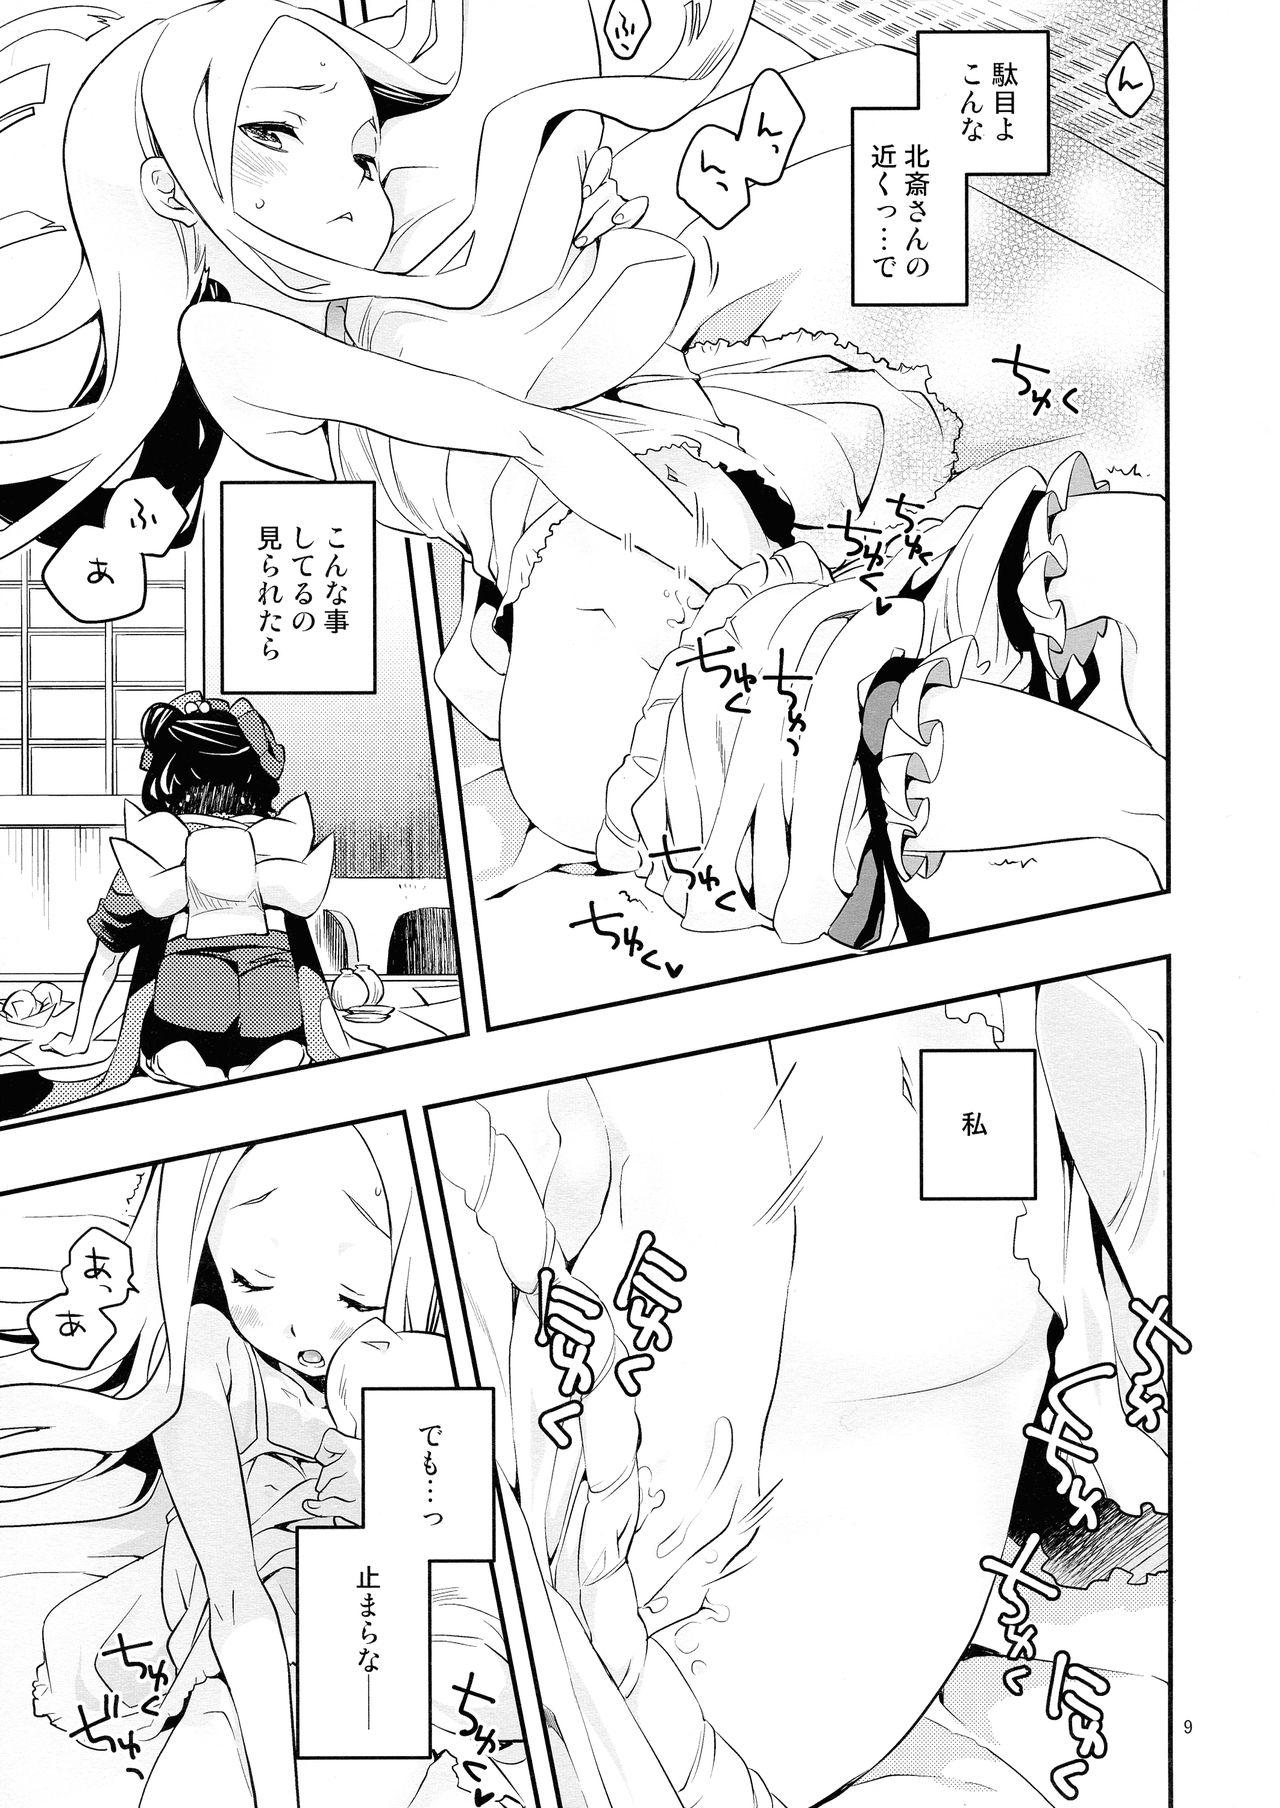 Snatch Kyou wa Otomari no Hi dakara - Fate grand order Bisexual - Page 9